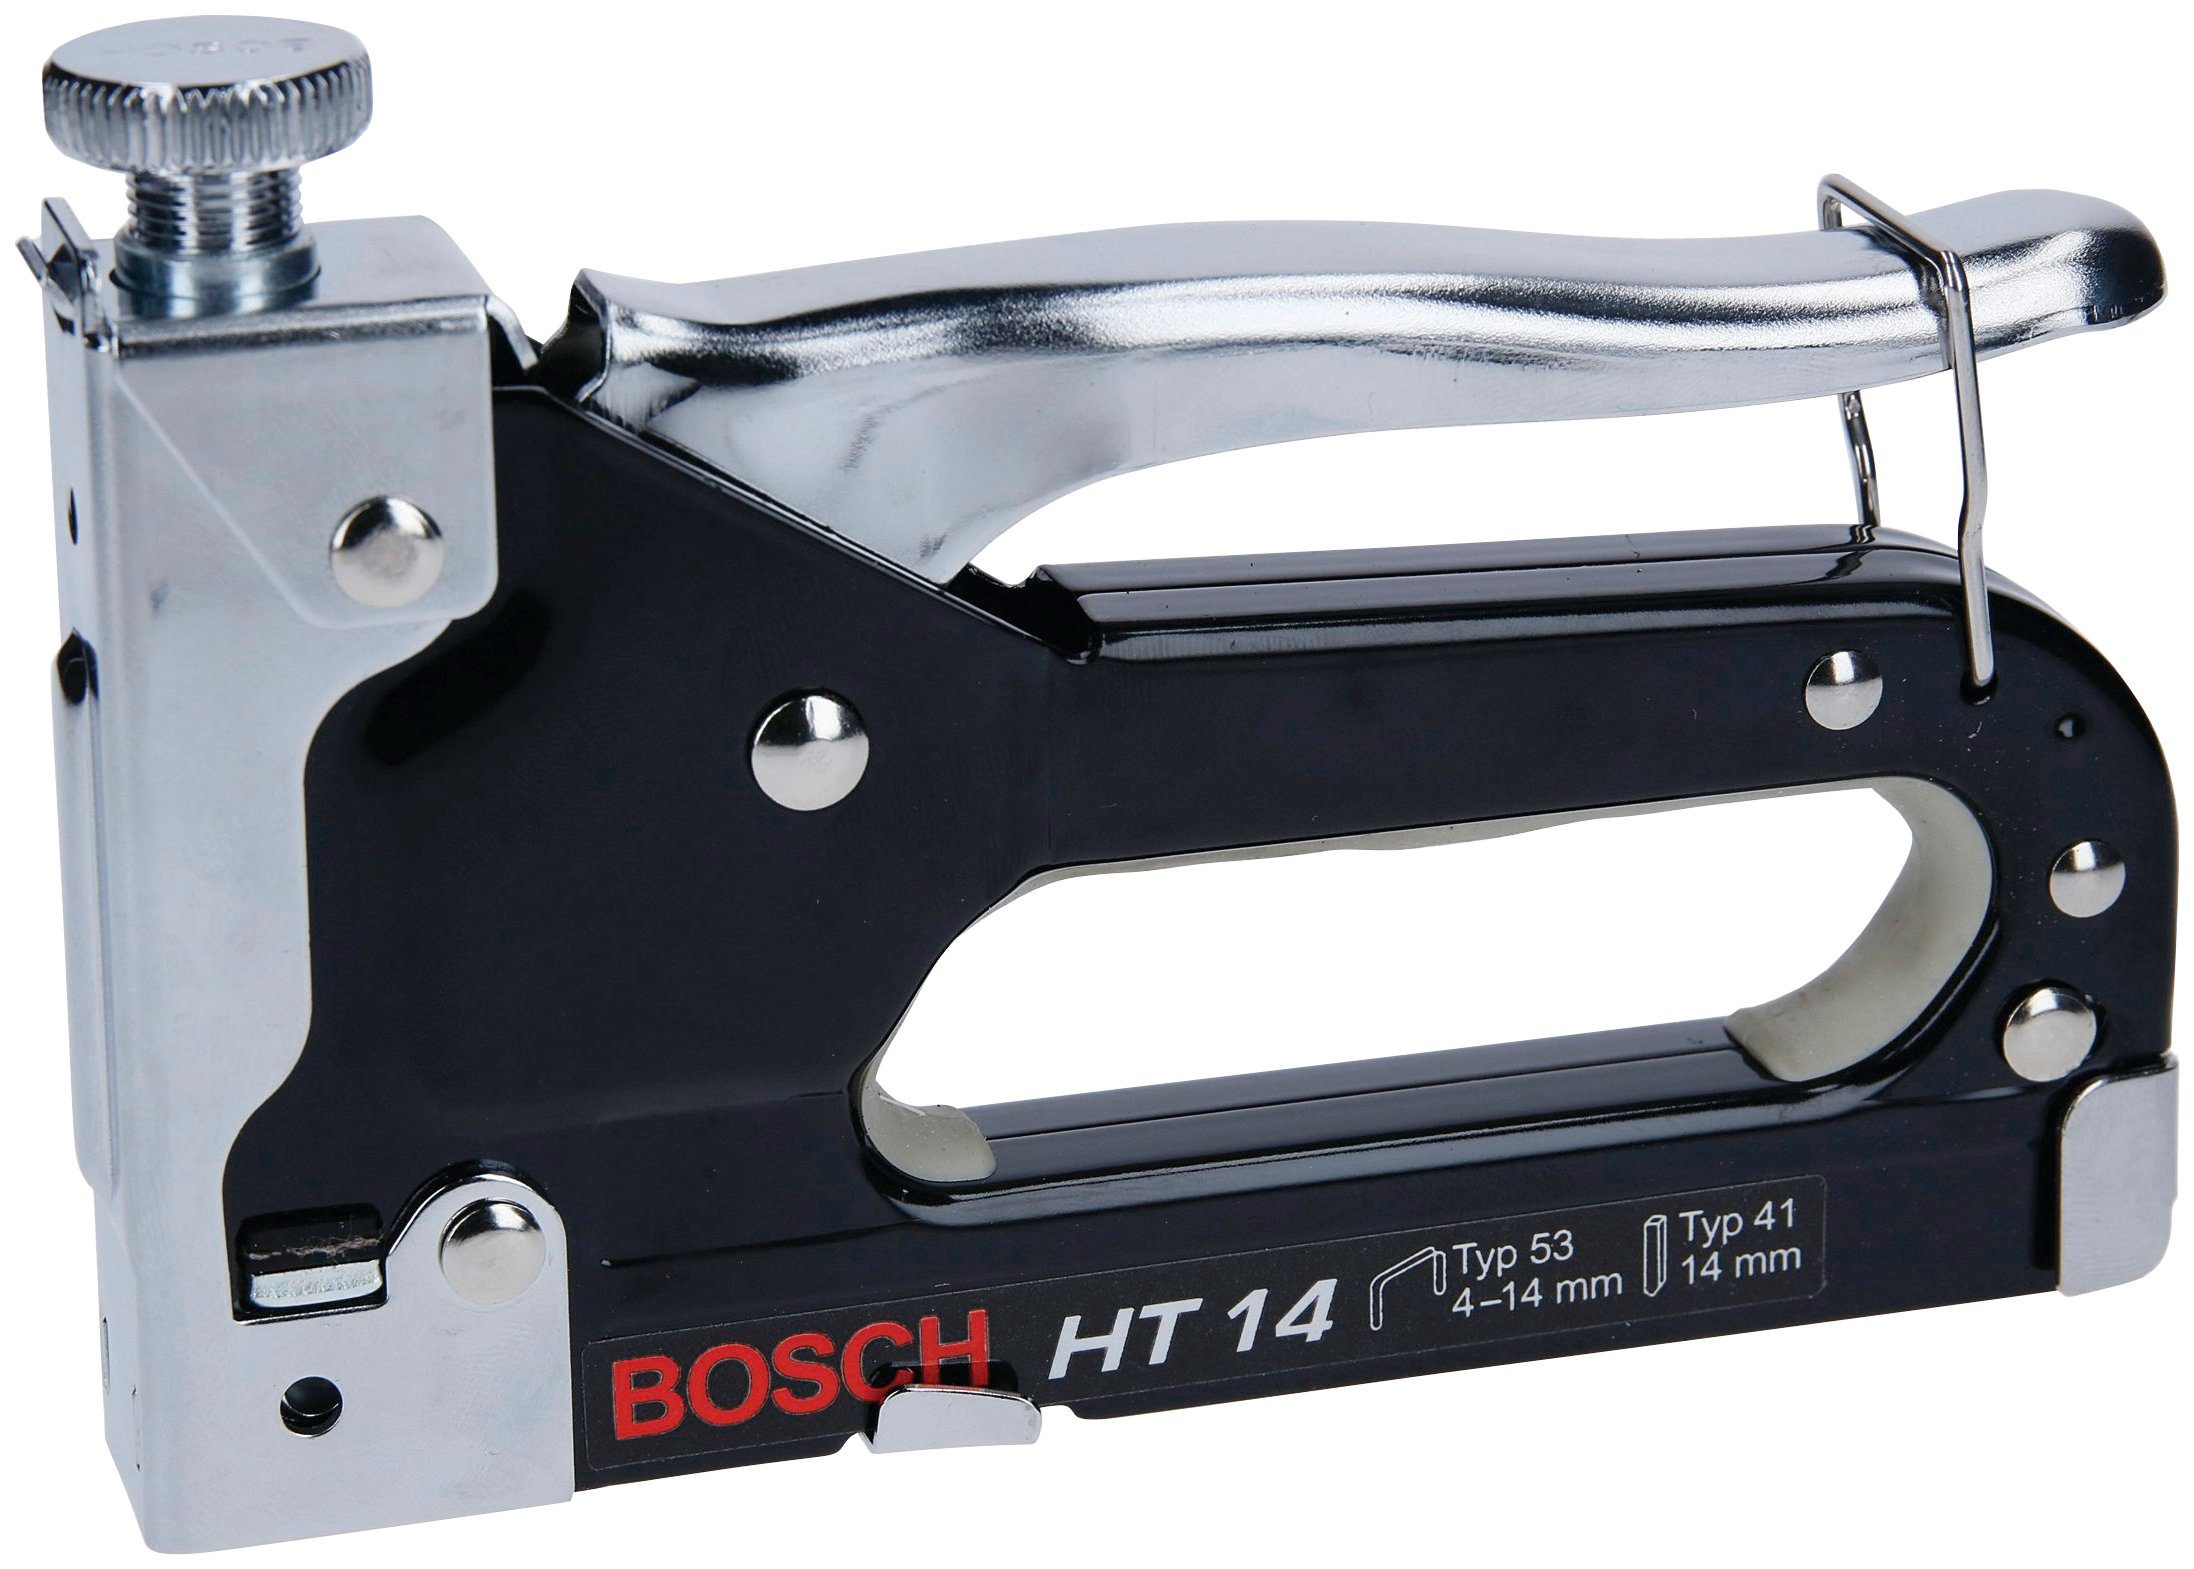 Handtacker Bosch Professional 14 HT